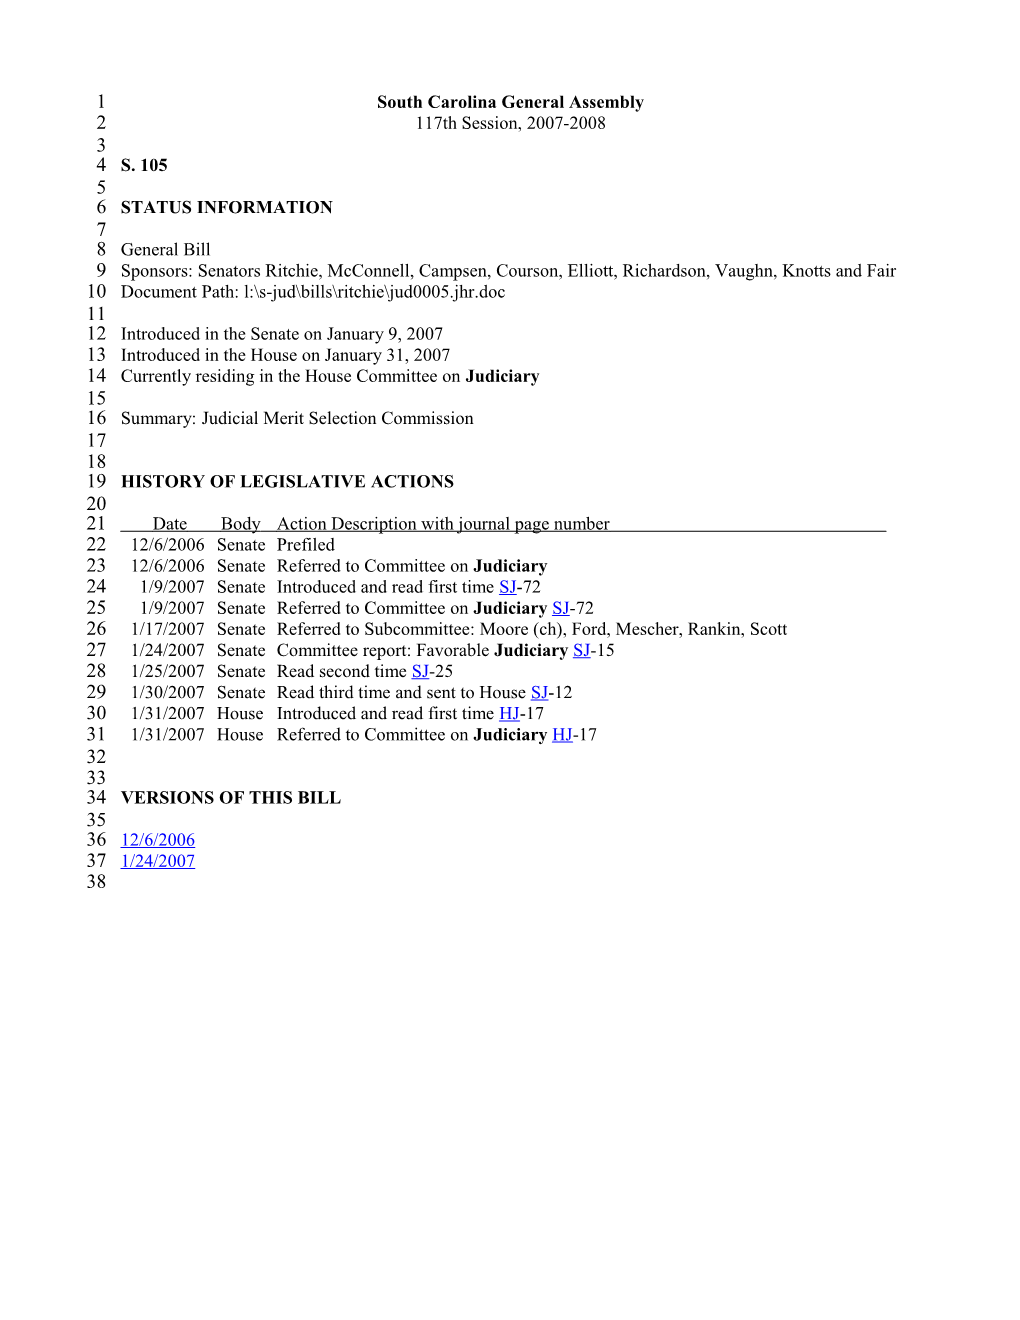 2007-2008 Bill 105: Judicial Merit Selection Commission - South Carolina Legislature Online